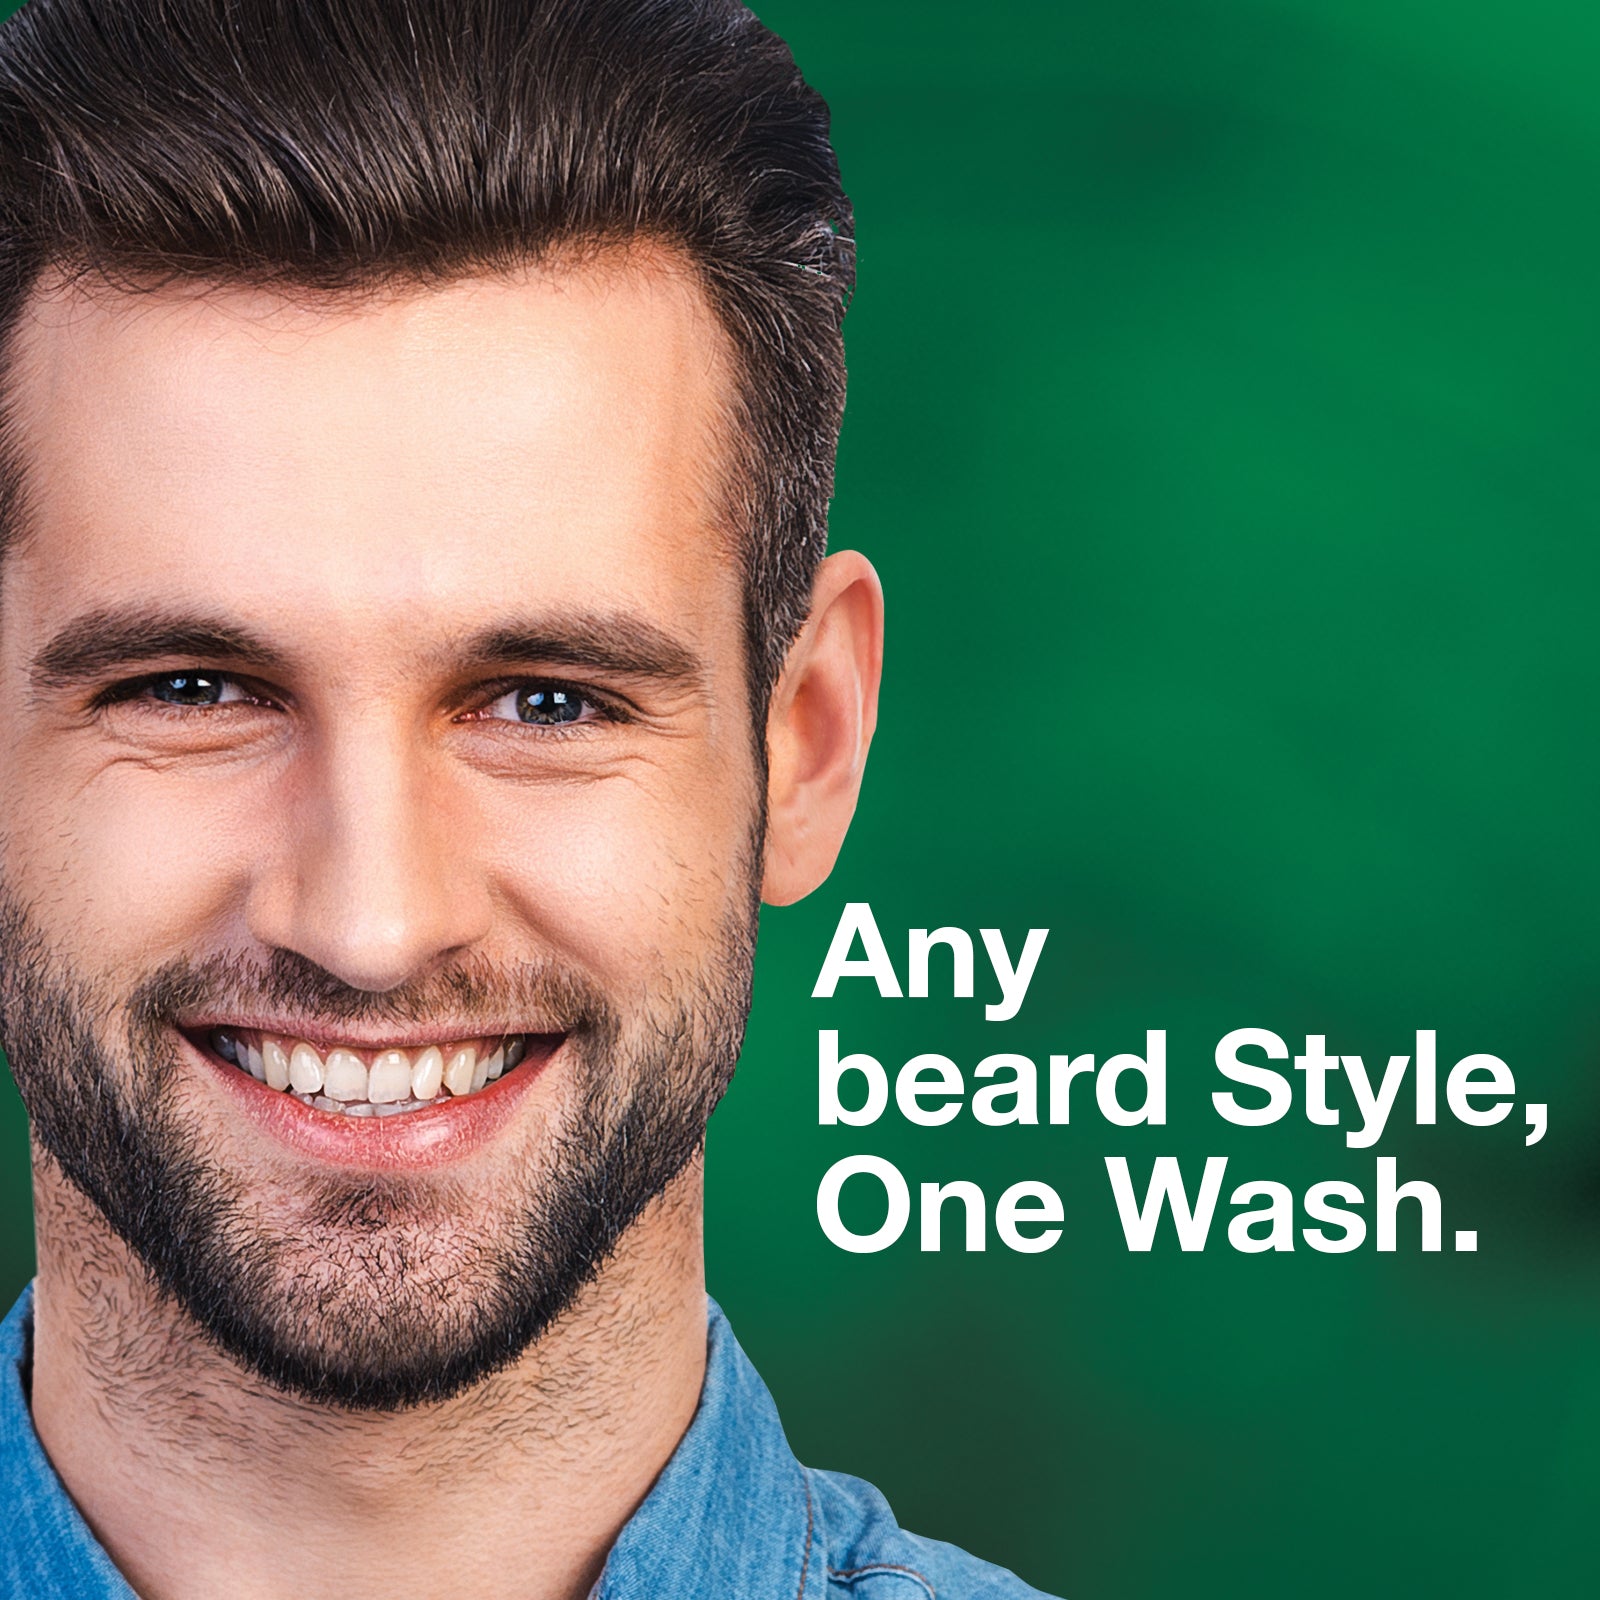 Men Face and Beard Wash 80ml